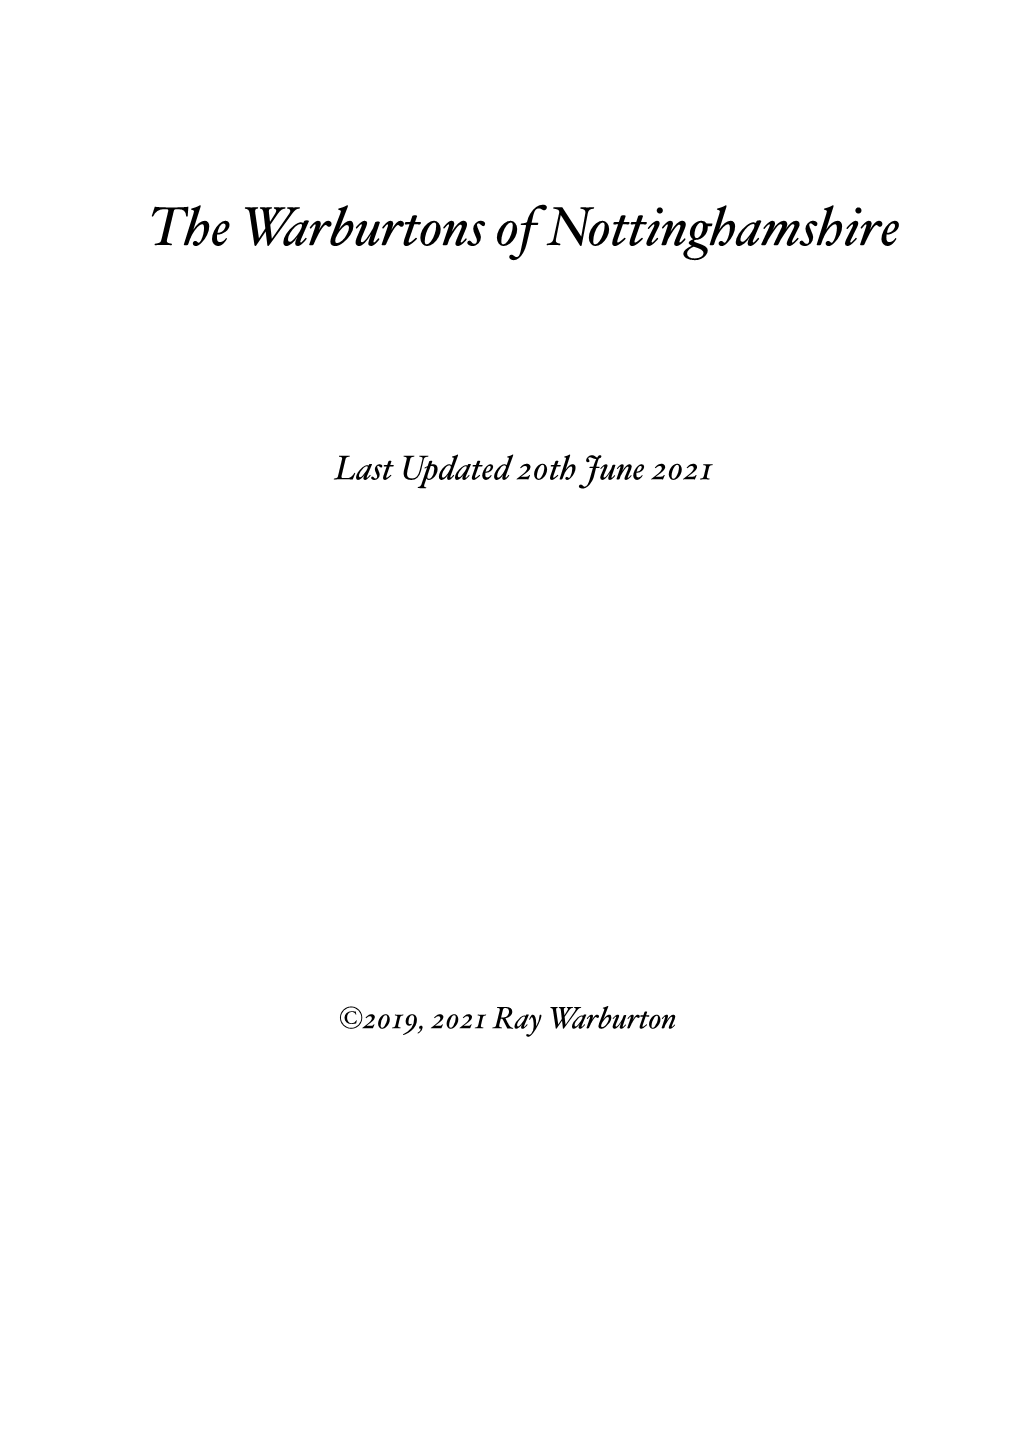 The Nottinghamshire Warburtons